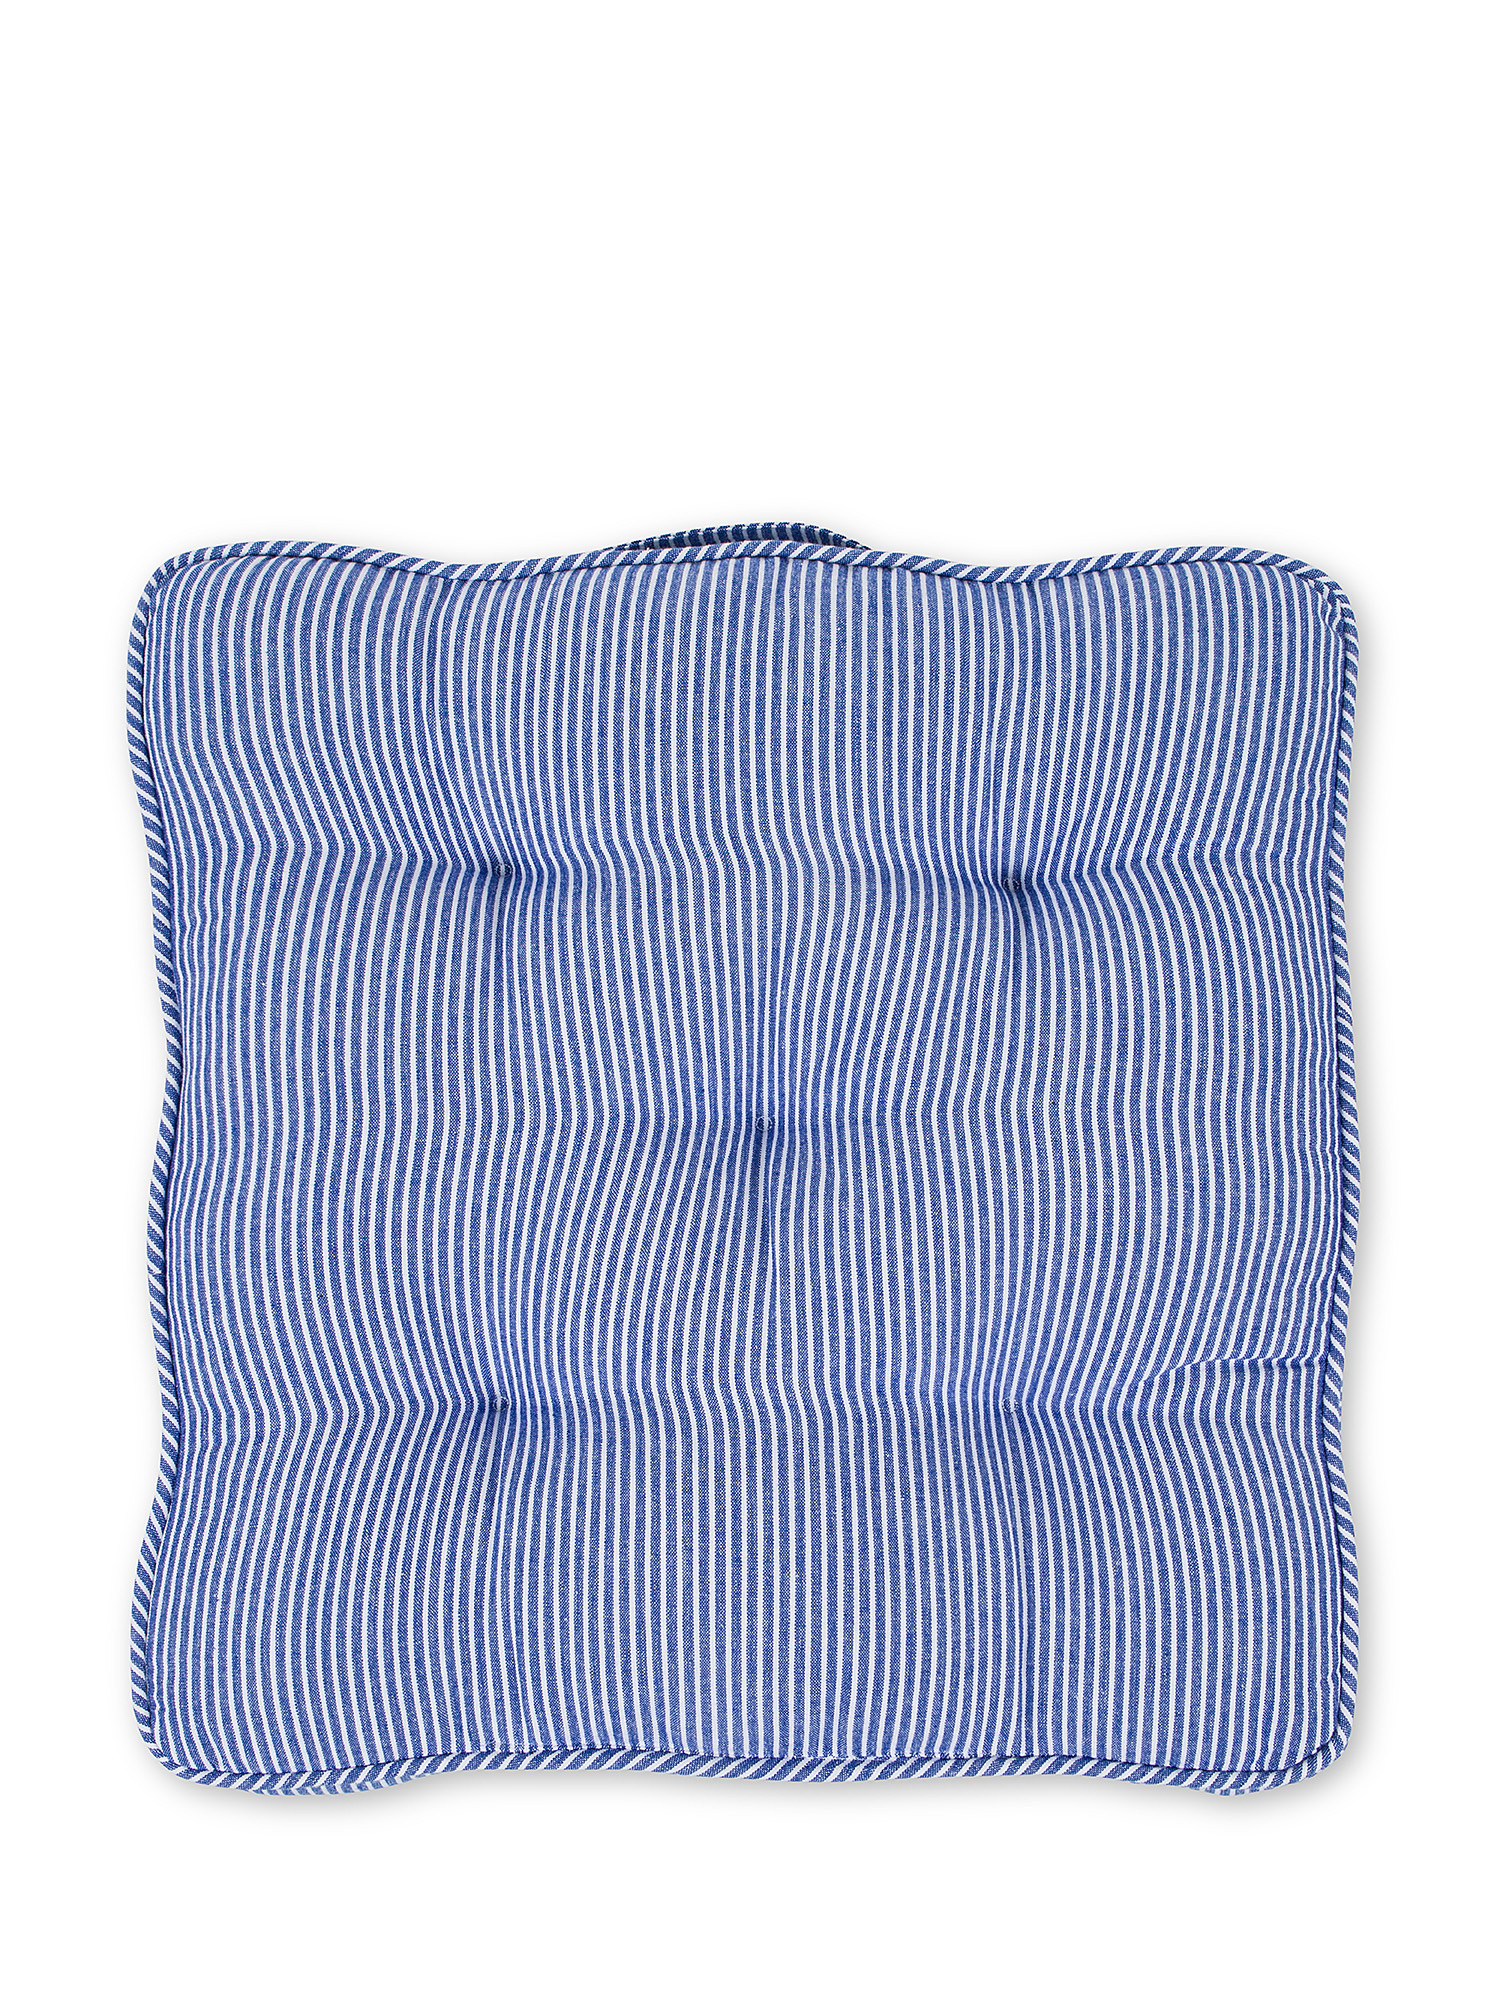 Cuscino 50x 50 cm a materasso, Bianco/Blu, large image number 1